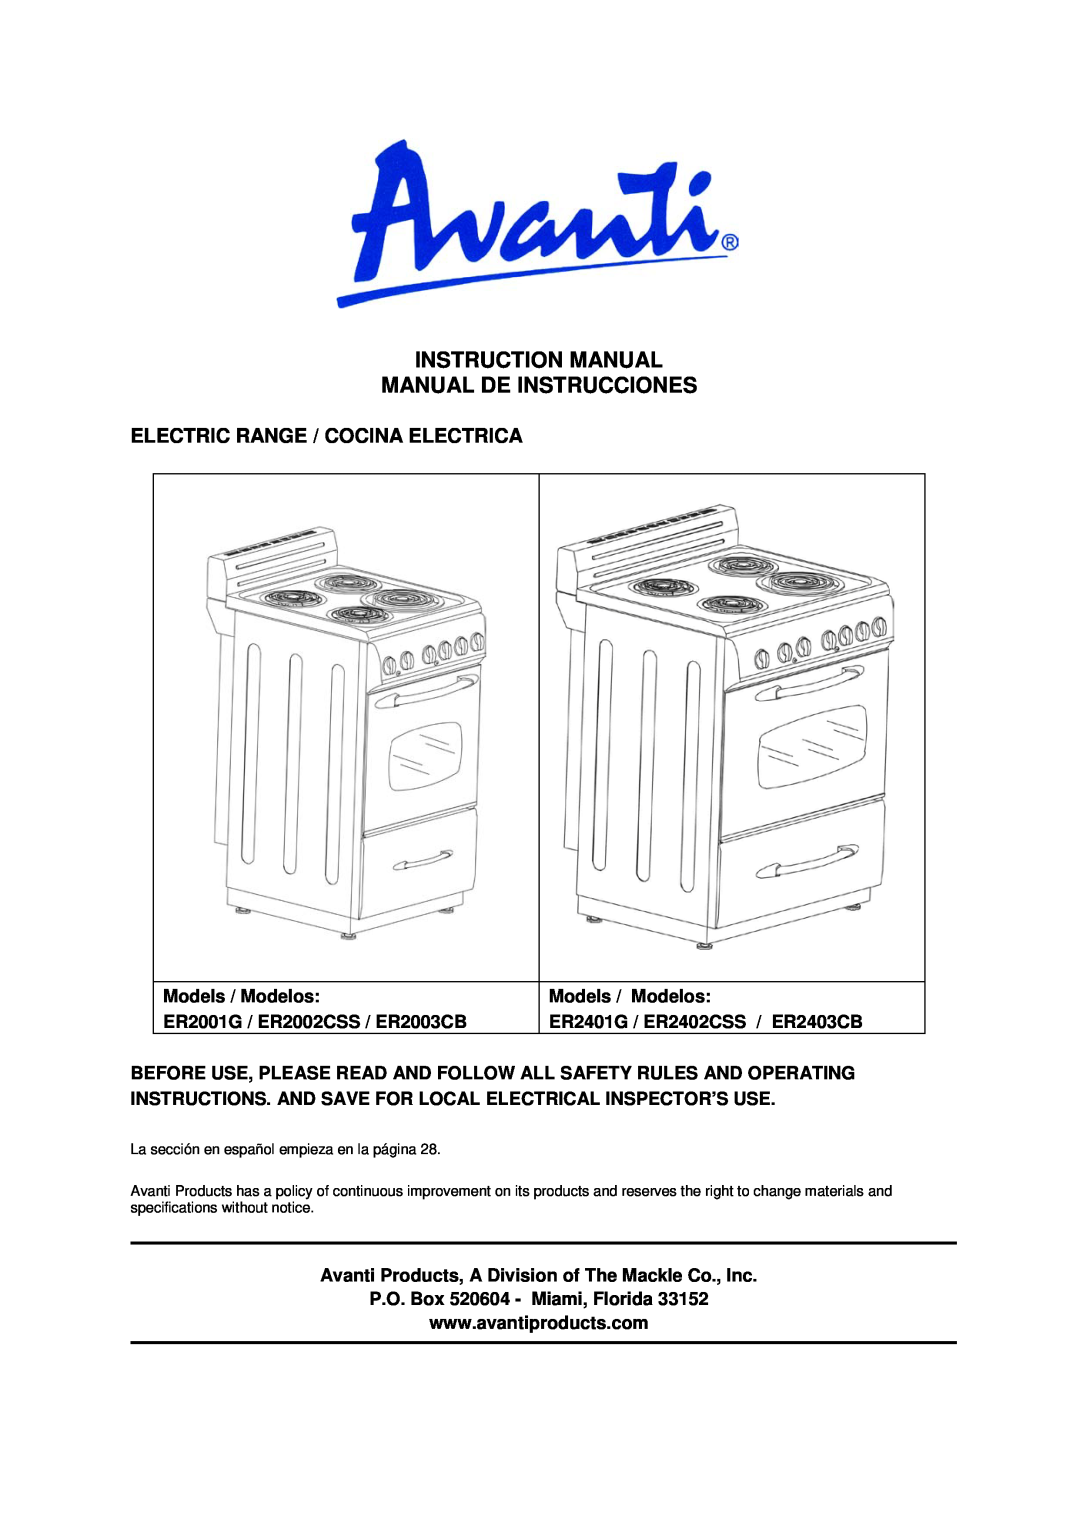 Avanti ER2402CSS instruction manual Electric Range / Cocina Electrica, Models / Modelos ER2001G / ER2002CSS / ER2003CB 